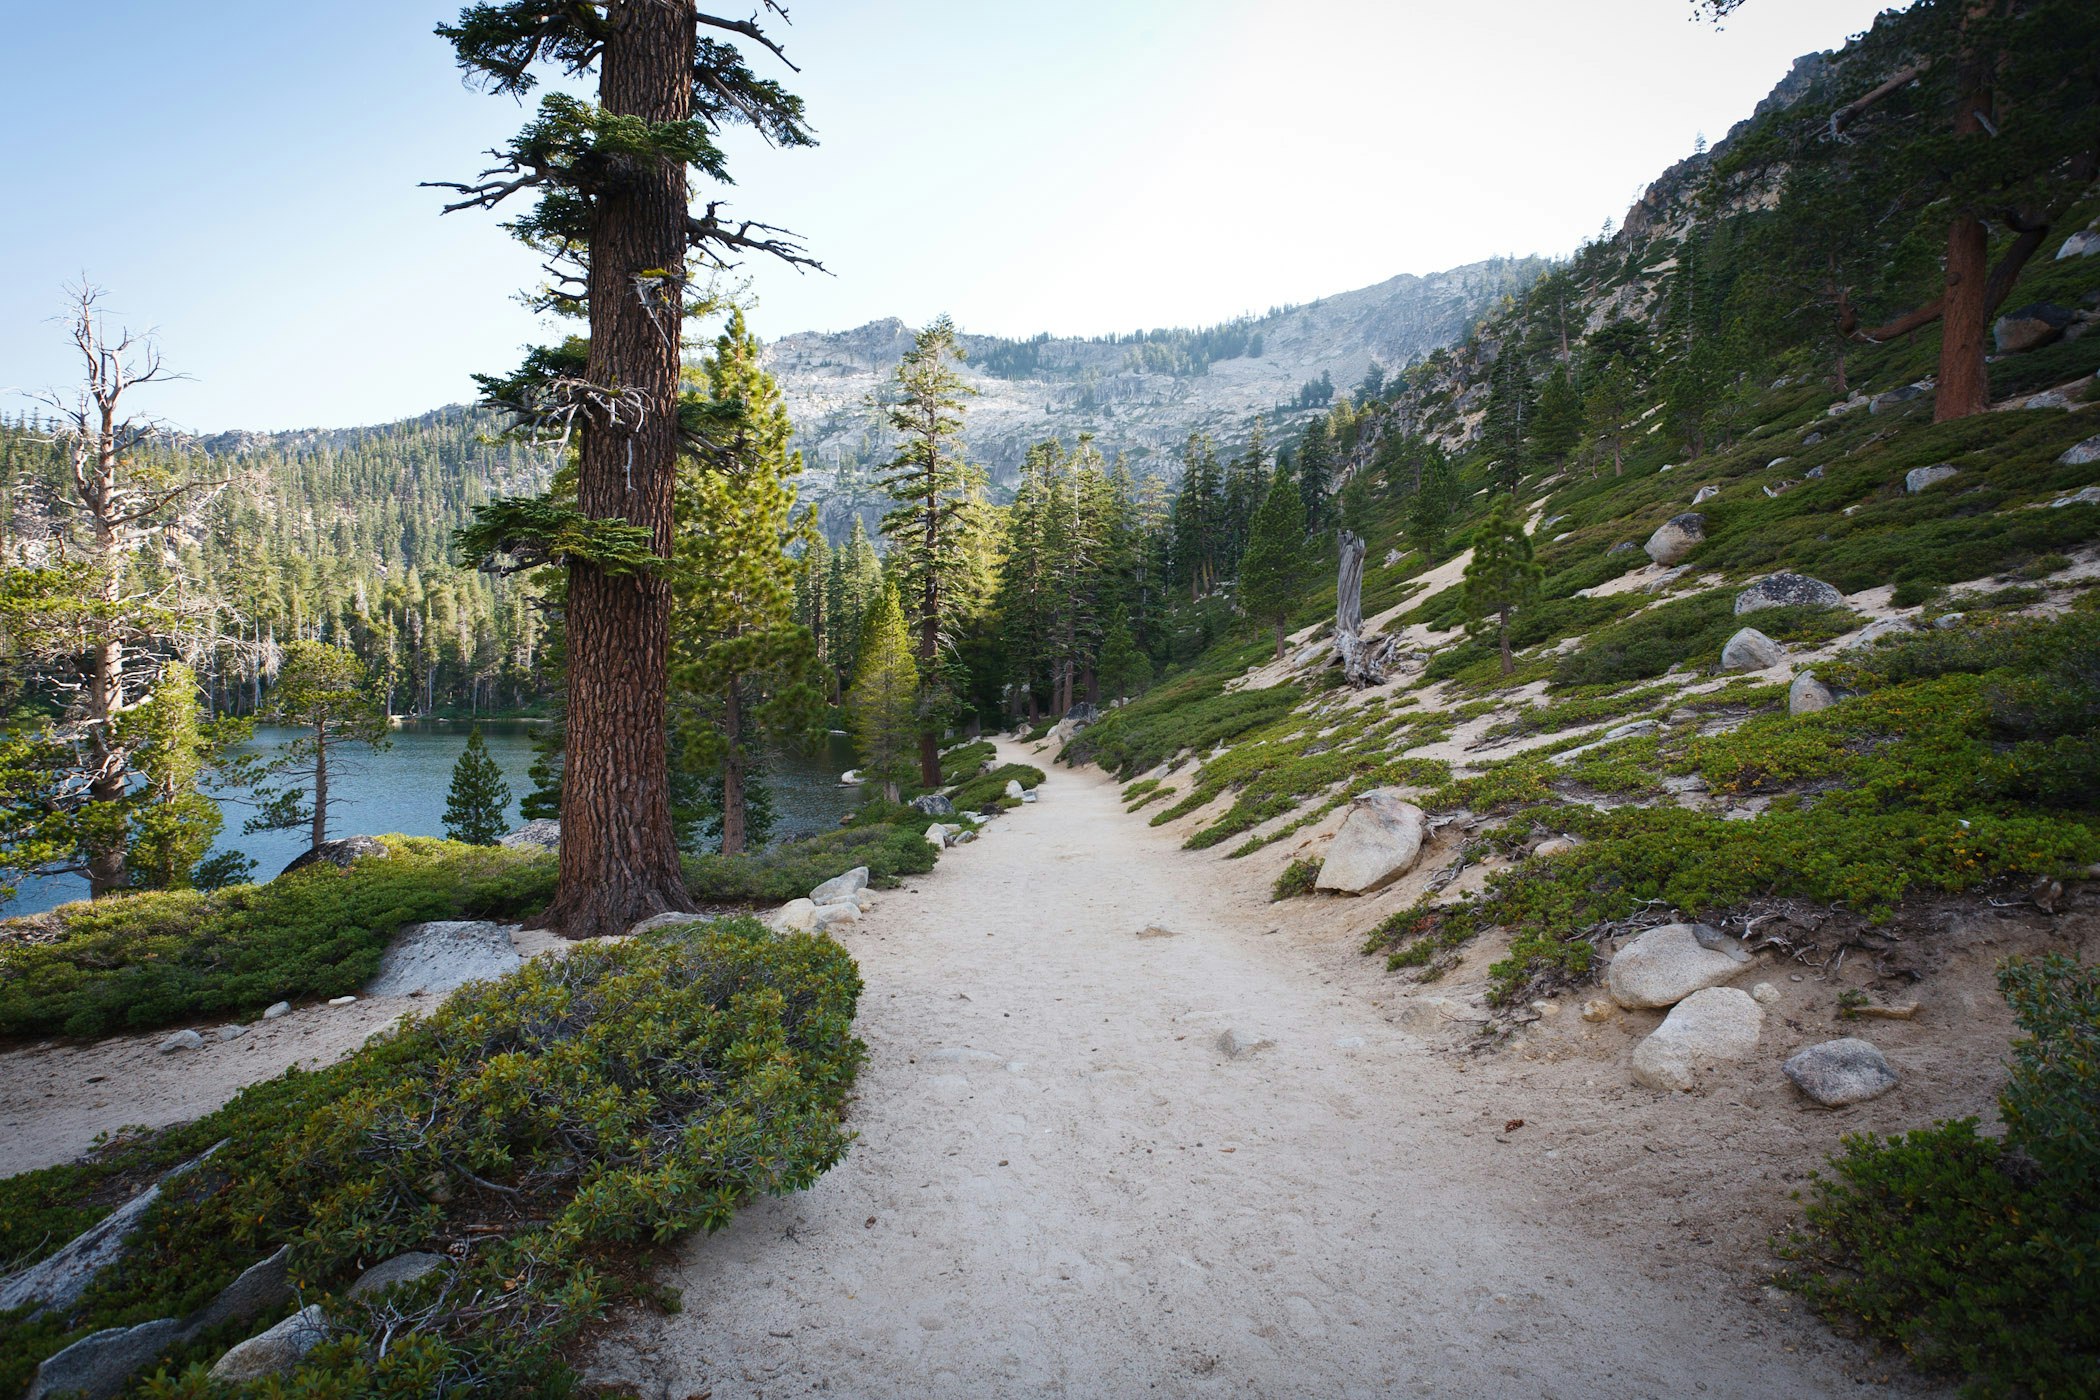 A woodland hiking trail leads down towards a lake